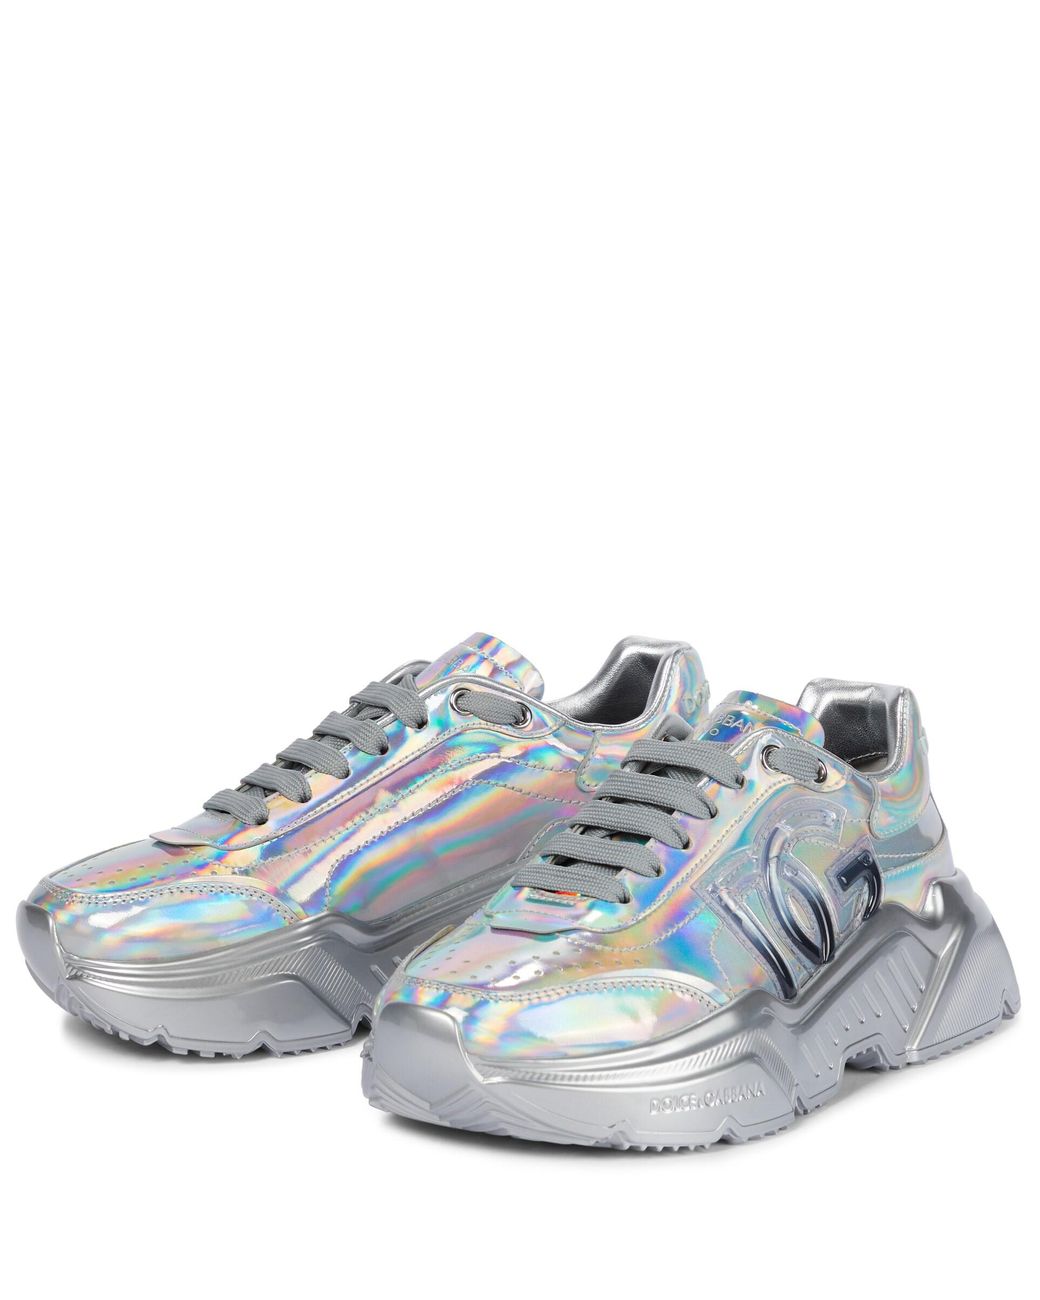 Holographic FILA Women's Disruptor II Iridescent Chunky Sneaker US Size 8  EUC | eBay